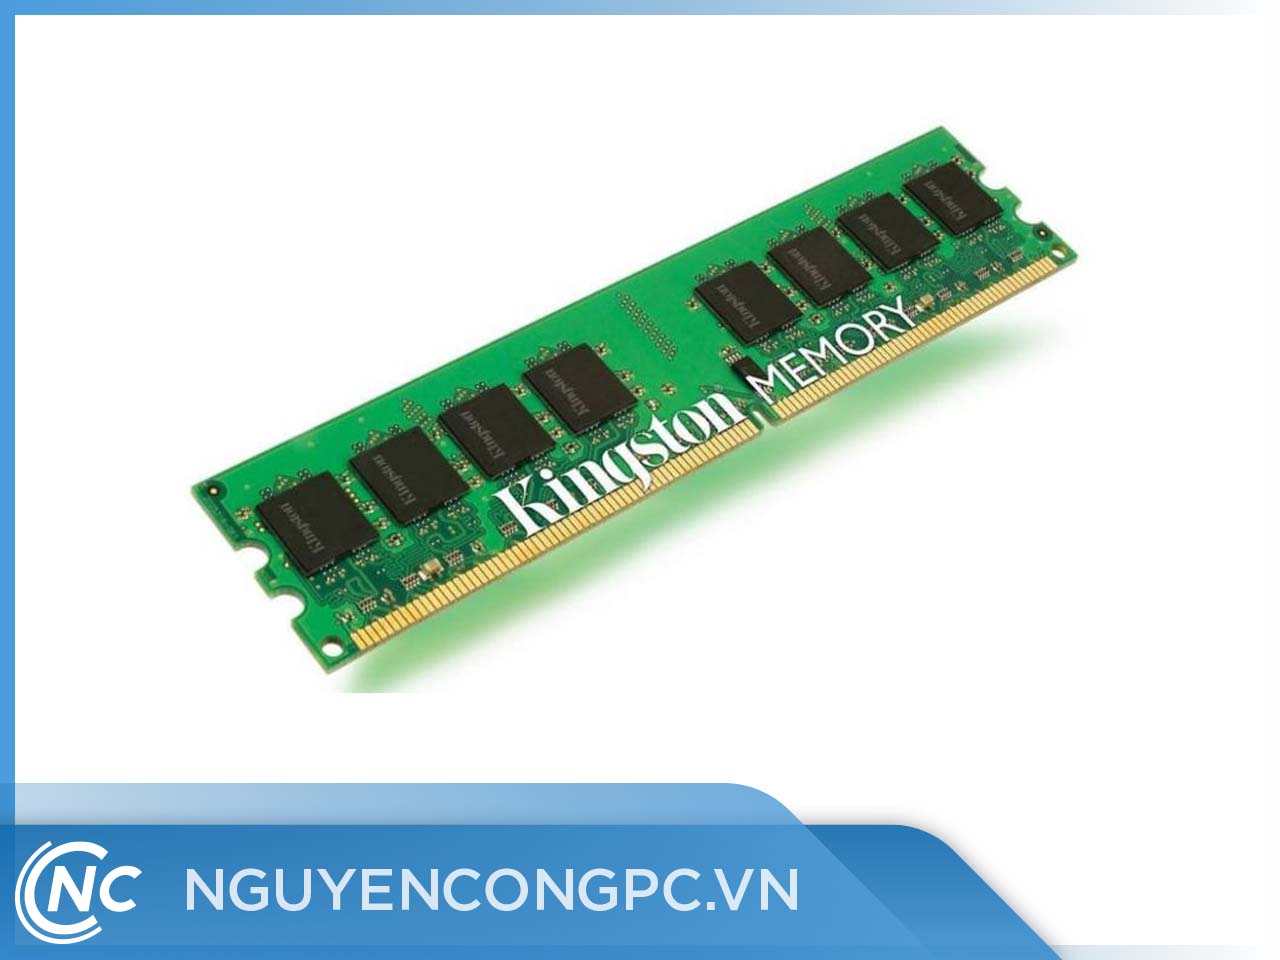 Ram Kingston 8GB DDR3 1600 Non-ECC KVR16N11/8